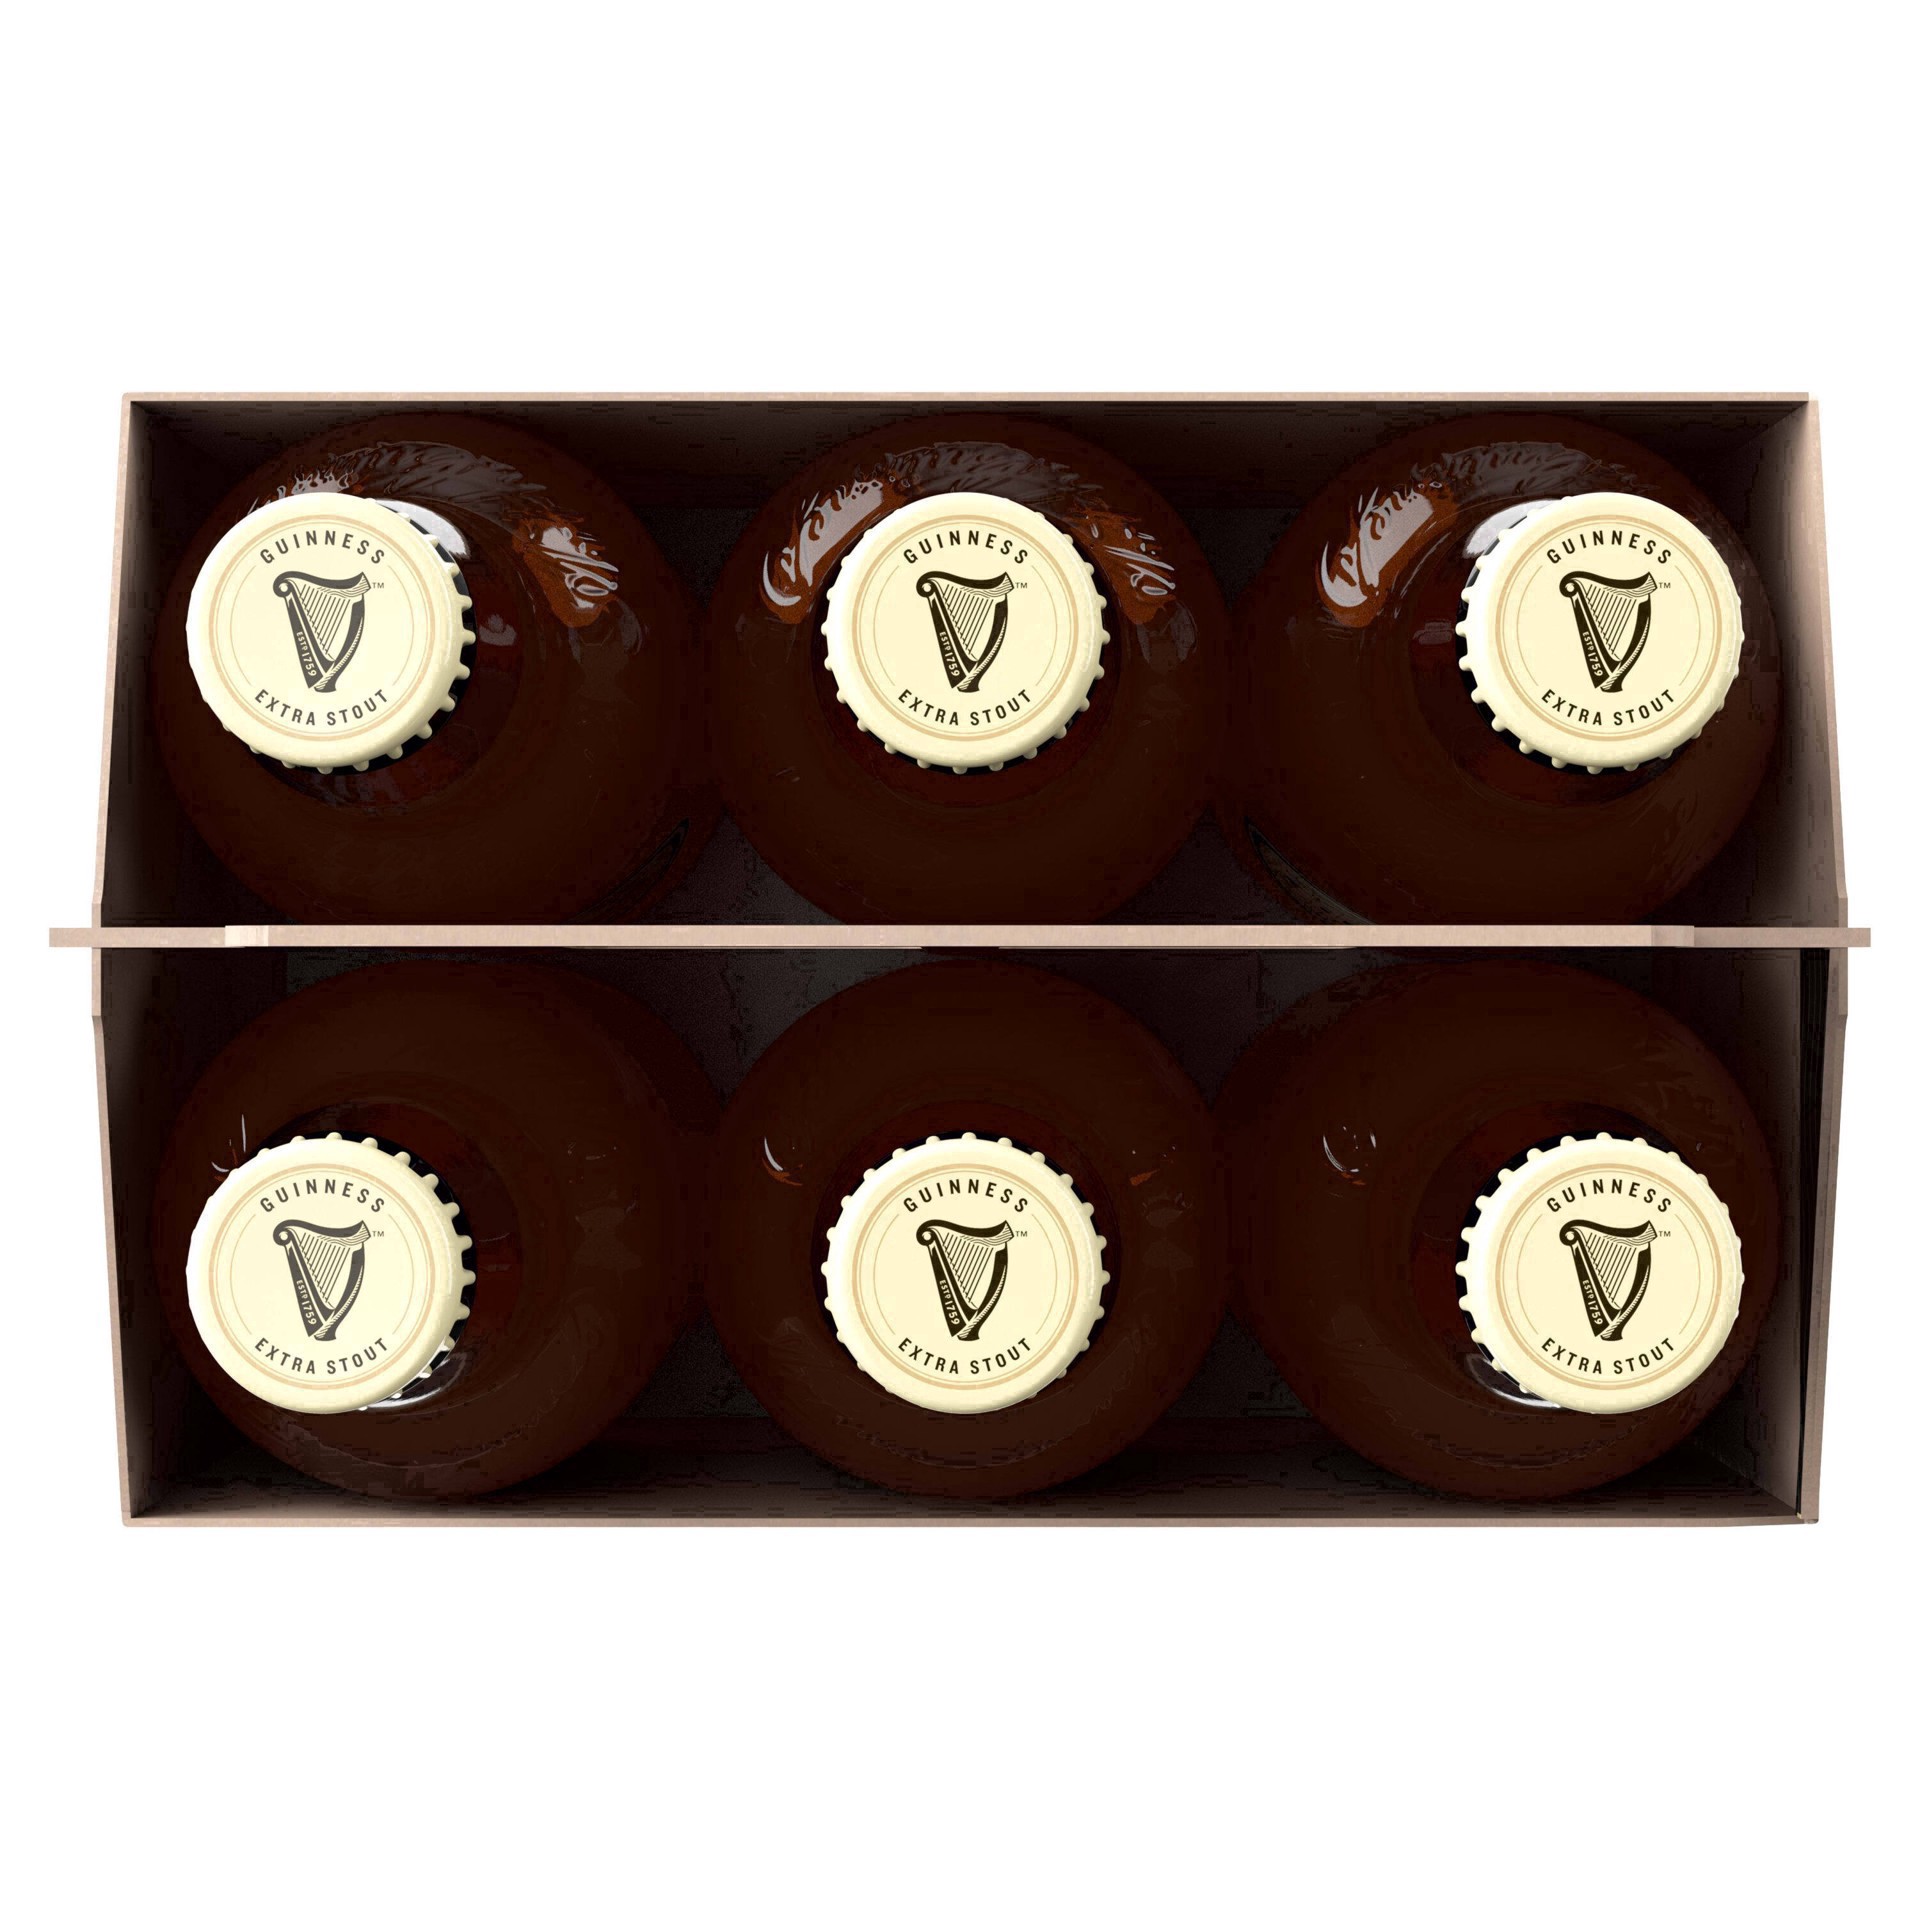 slide 33 of 89, Guinness Extra Stout Import Beer, 11.2 fl oz, 6 Pack Bottles, 5.6% ABV, 11.2 fl oz